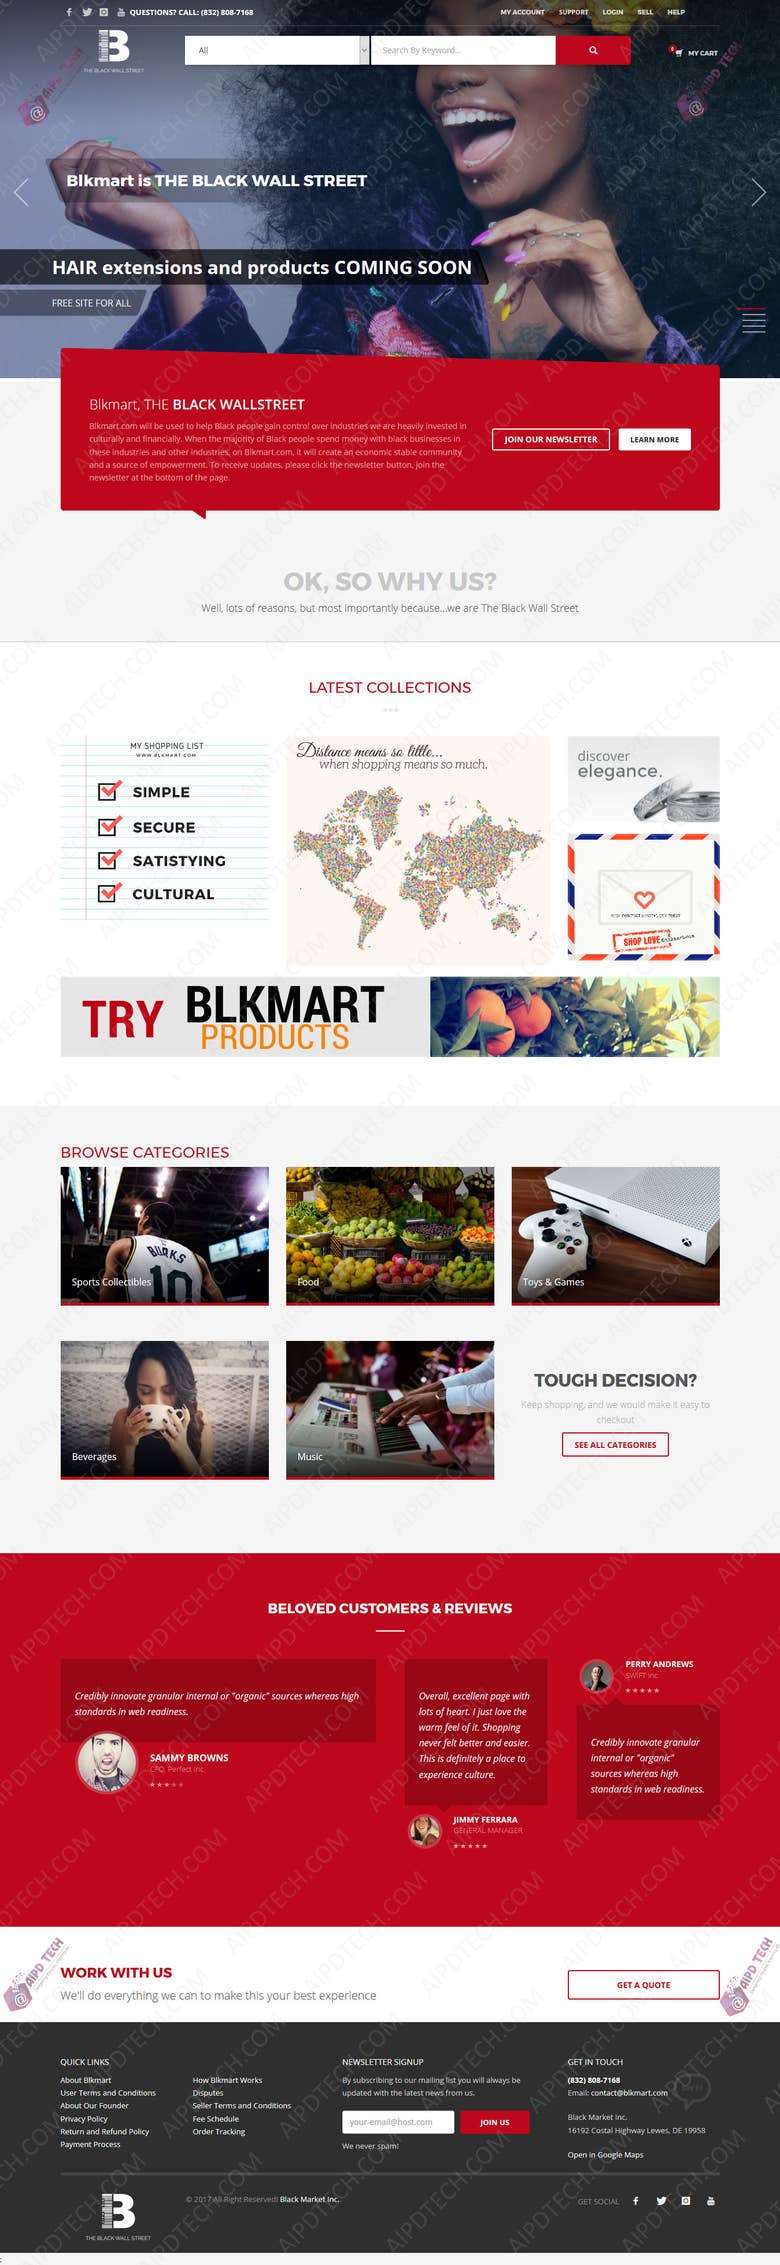 Blkmart E-Commerce Website Like Amazon